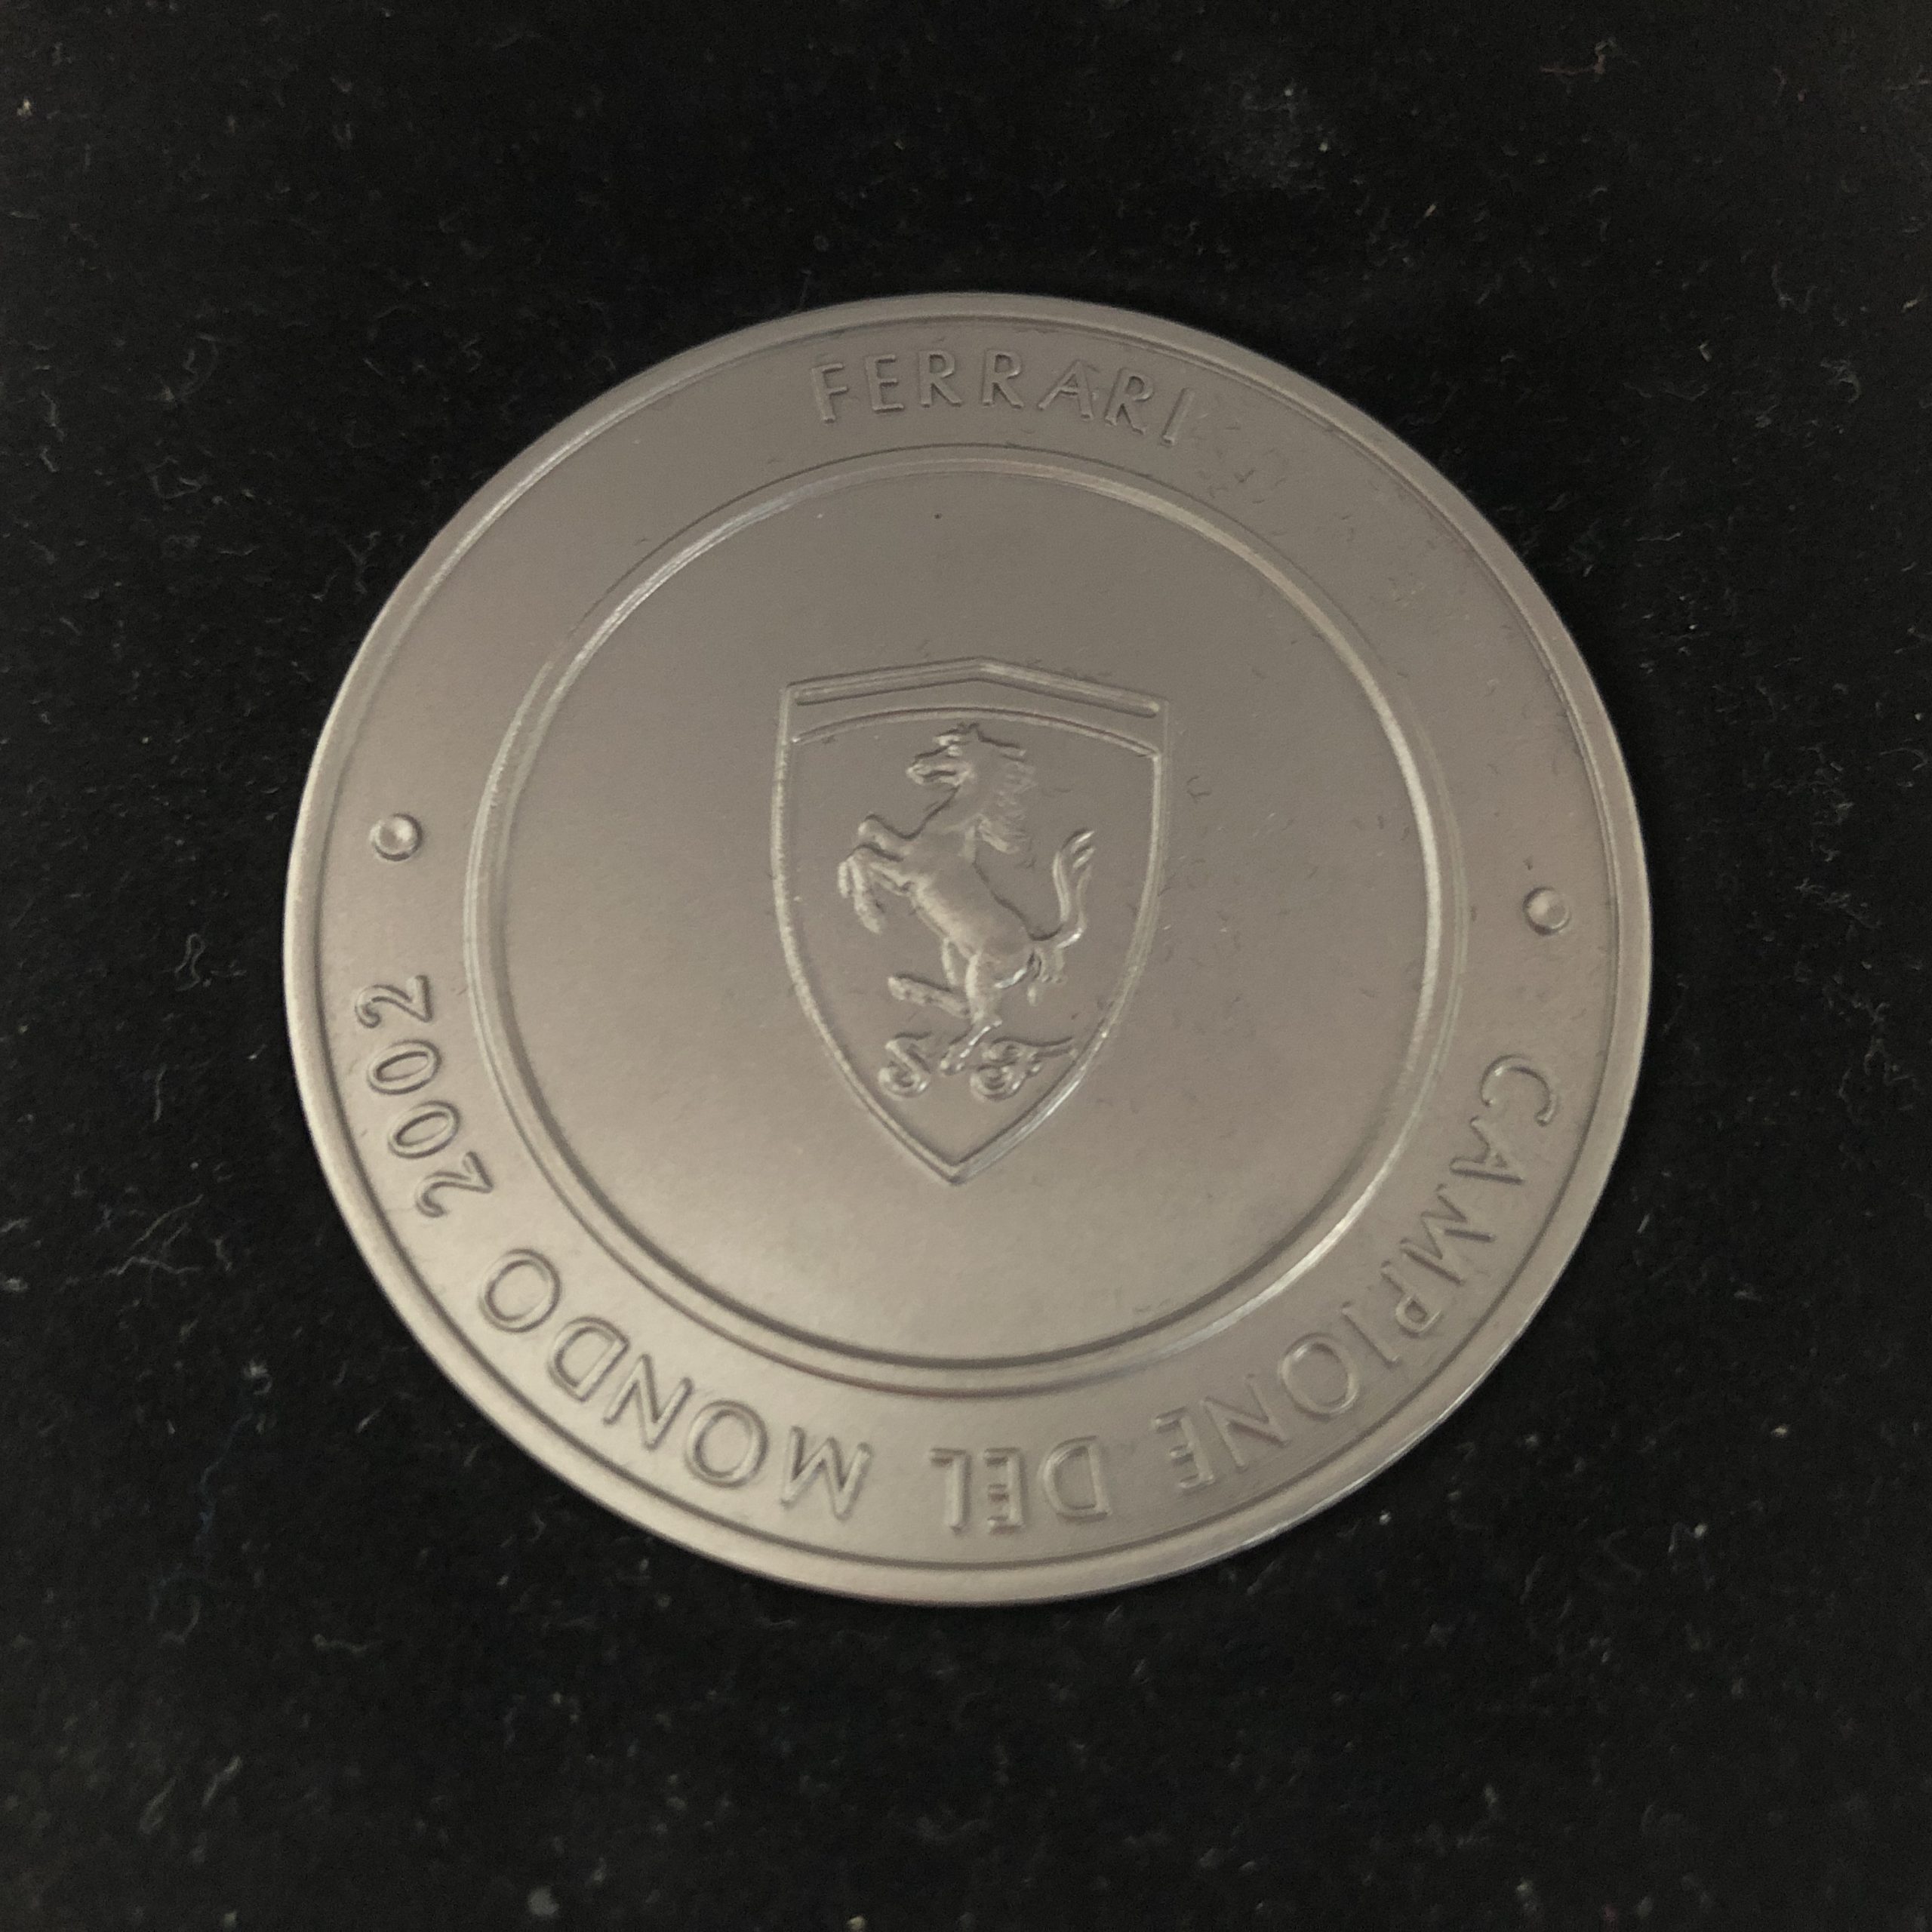 Official Ferrari F1 World Championship 2002 Titanium Medal / Coin ...